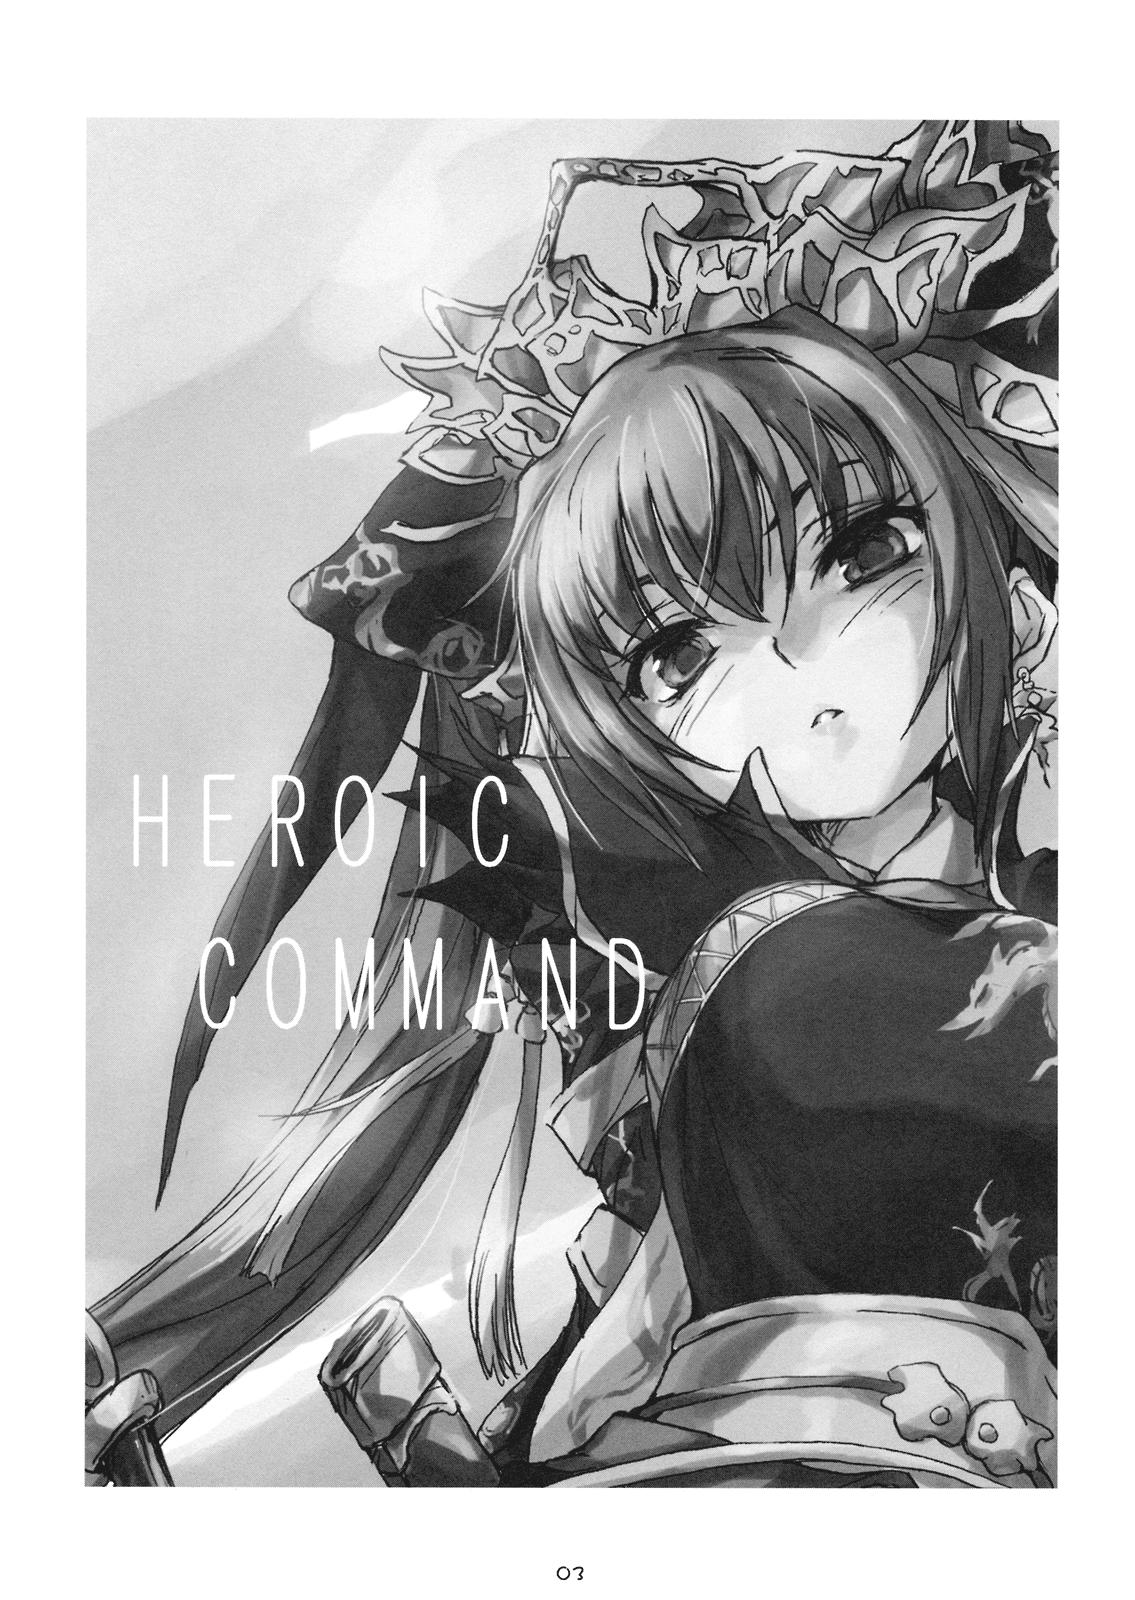 HEROIC COMMAND Beta Edition 3